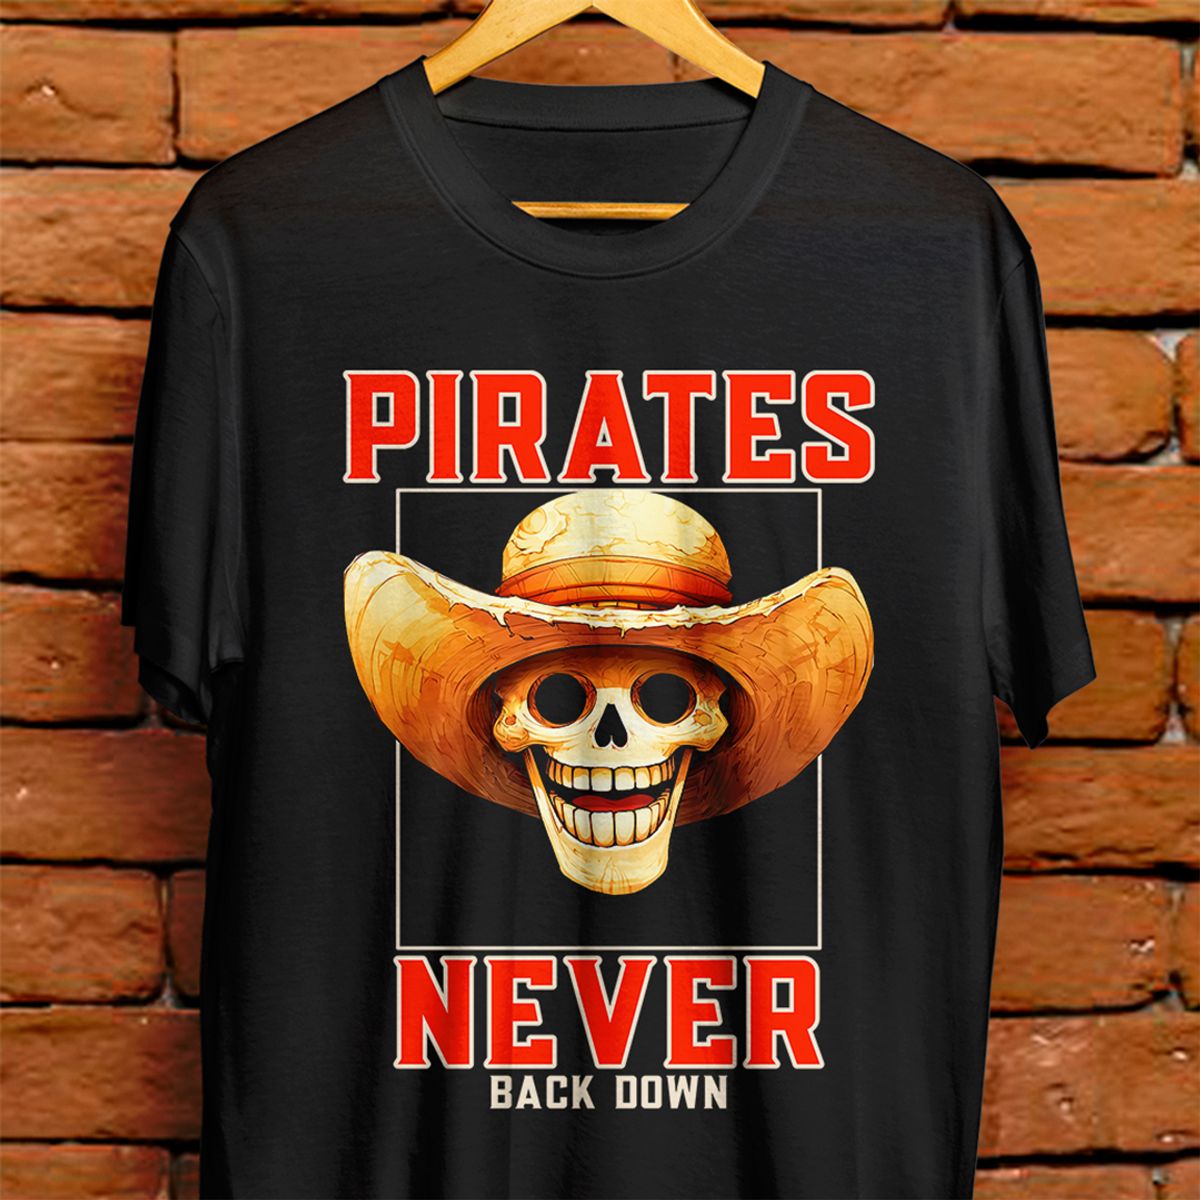 Nome do produto: Camiseta Unissex - Pirates never back down